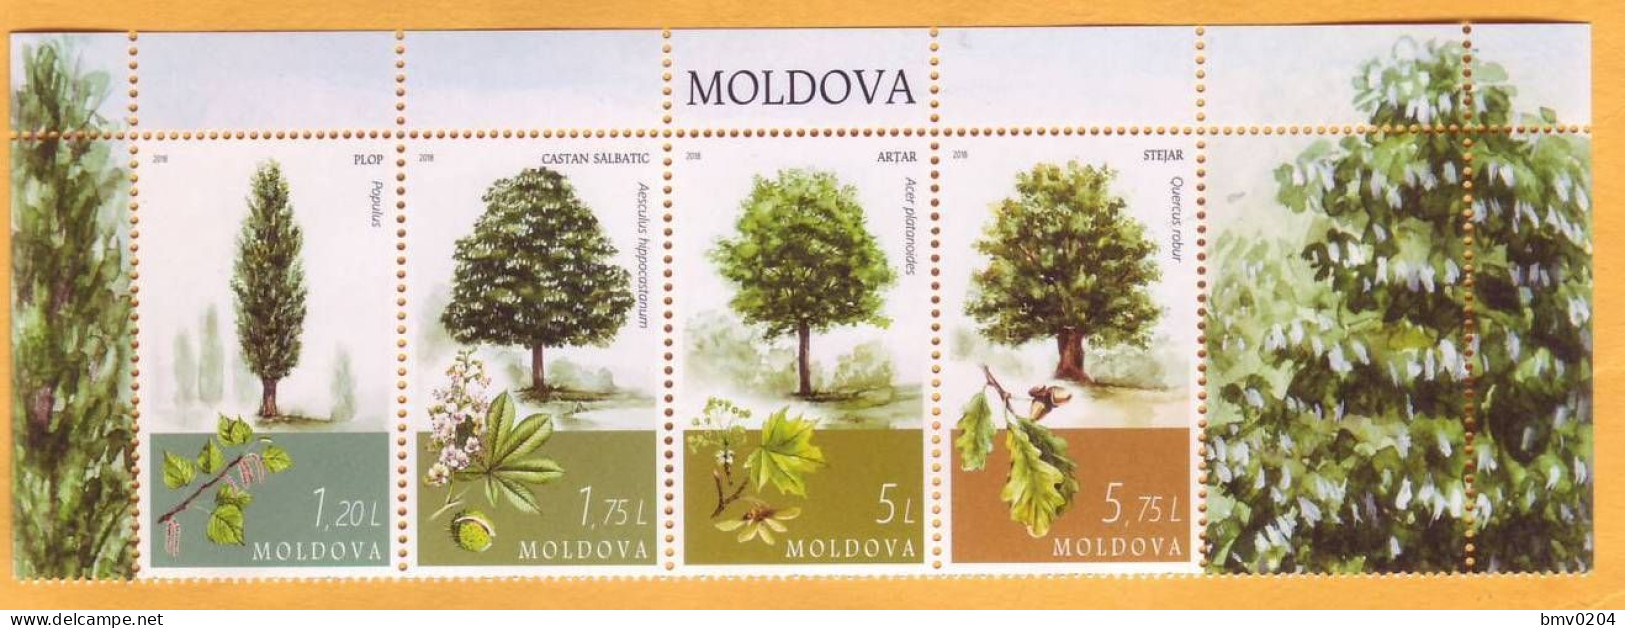 2018 Moldova Moldavie "The Main Tree Species In Moldova": Oak, Chestnut, Ash, Maple 4v Mint. - Bomen